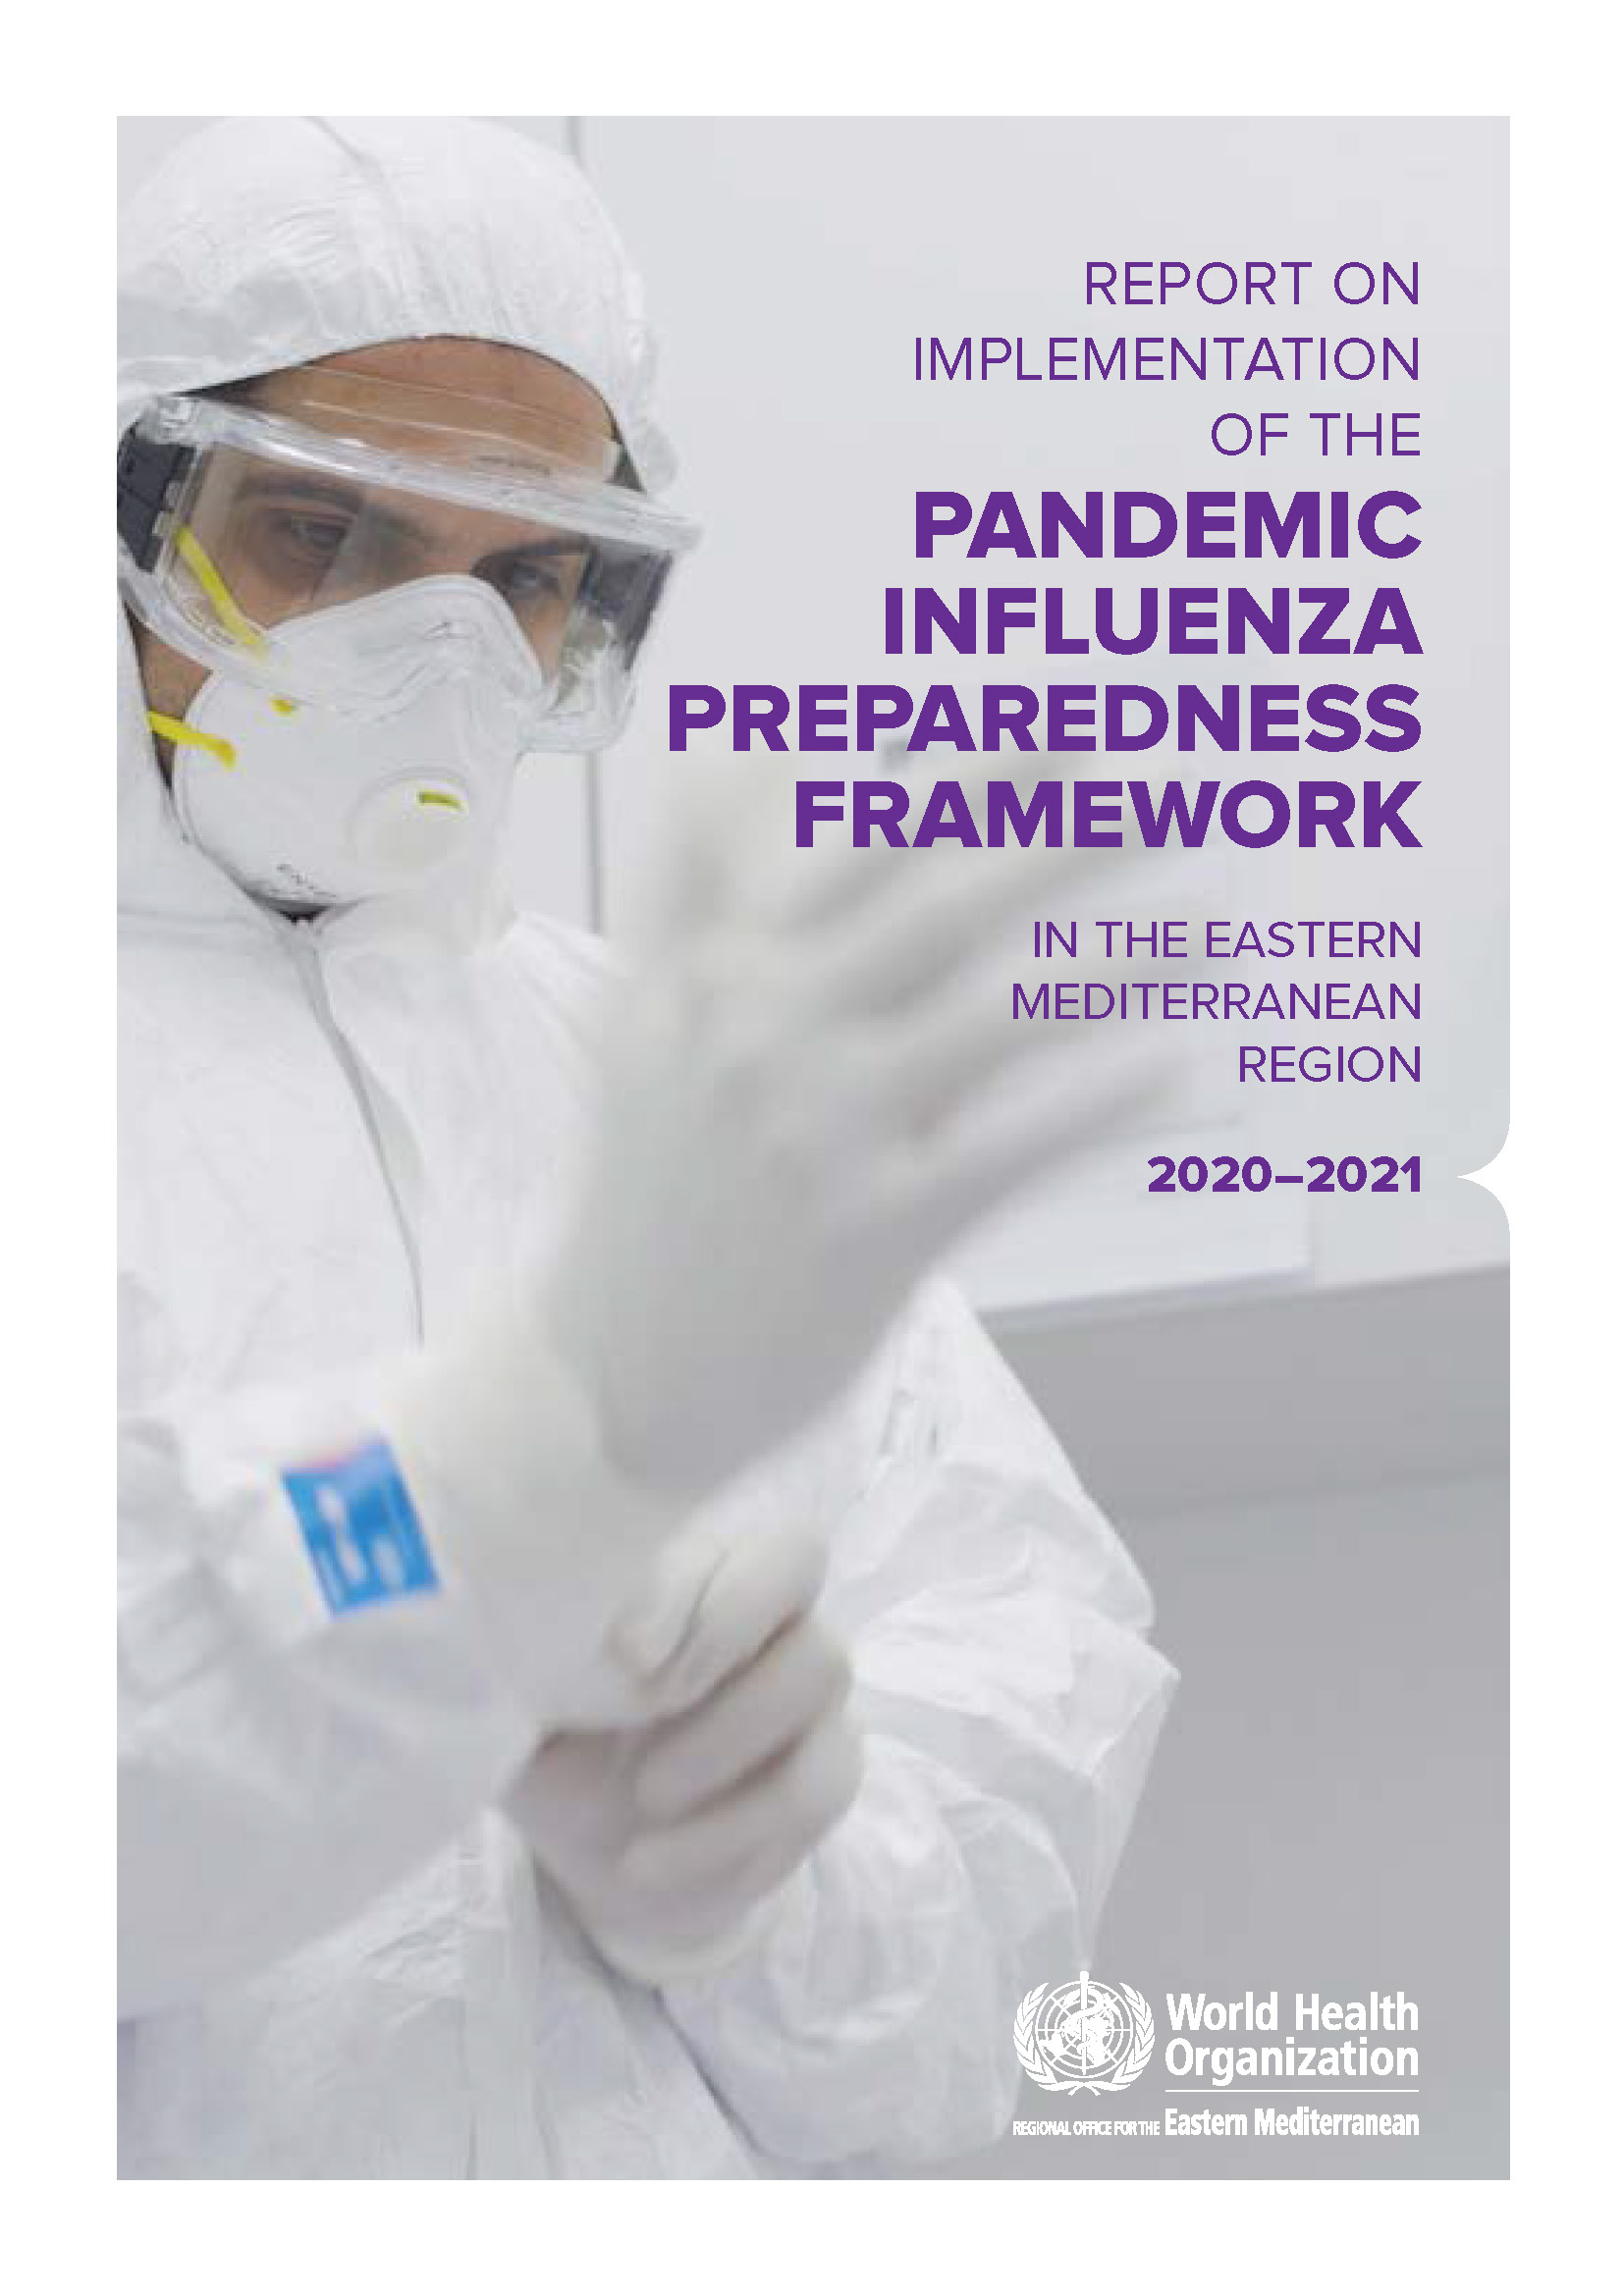 Report on implementation of pandemic influenza preparedness framework: Eastern Mediterranean Region, 2020-2021